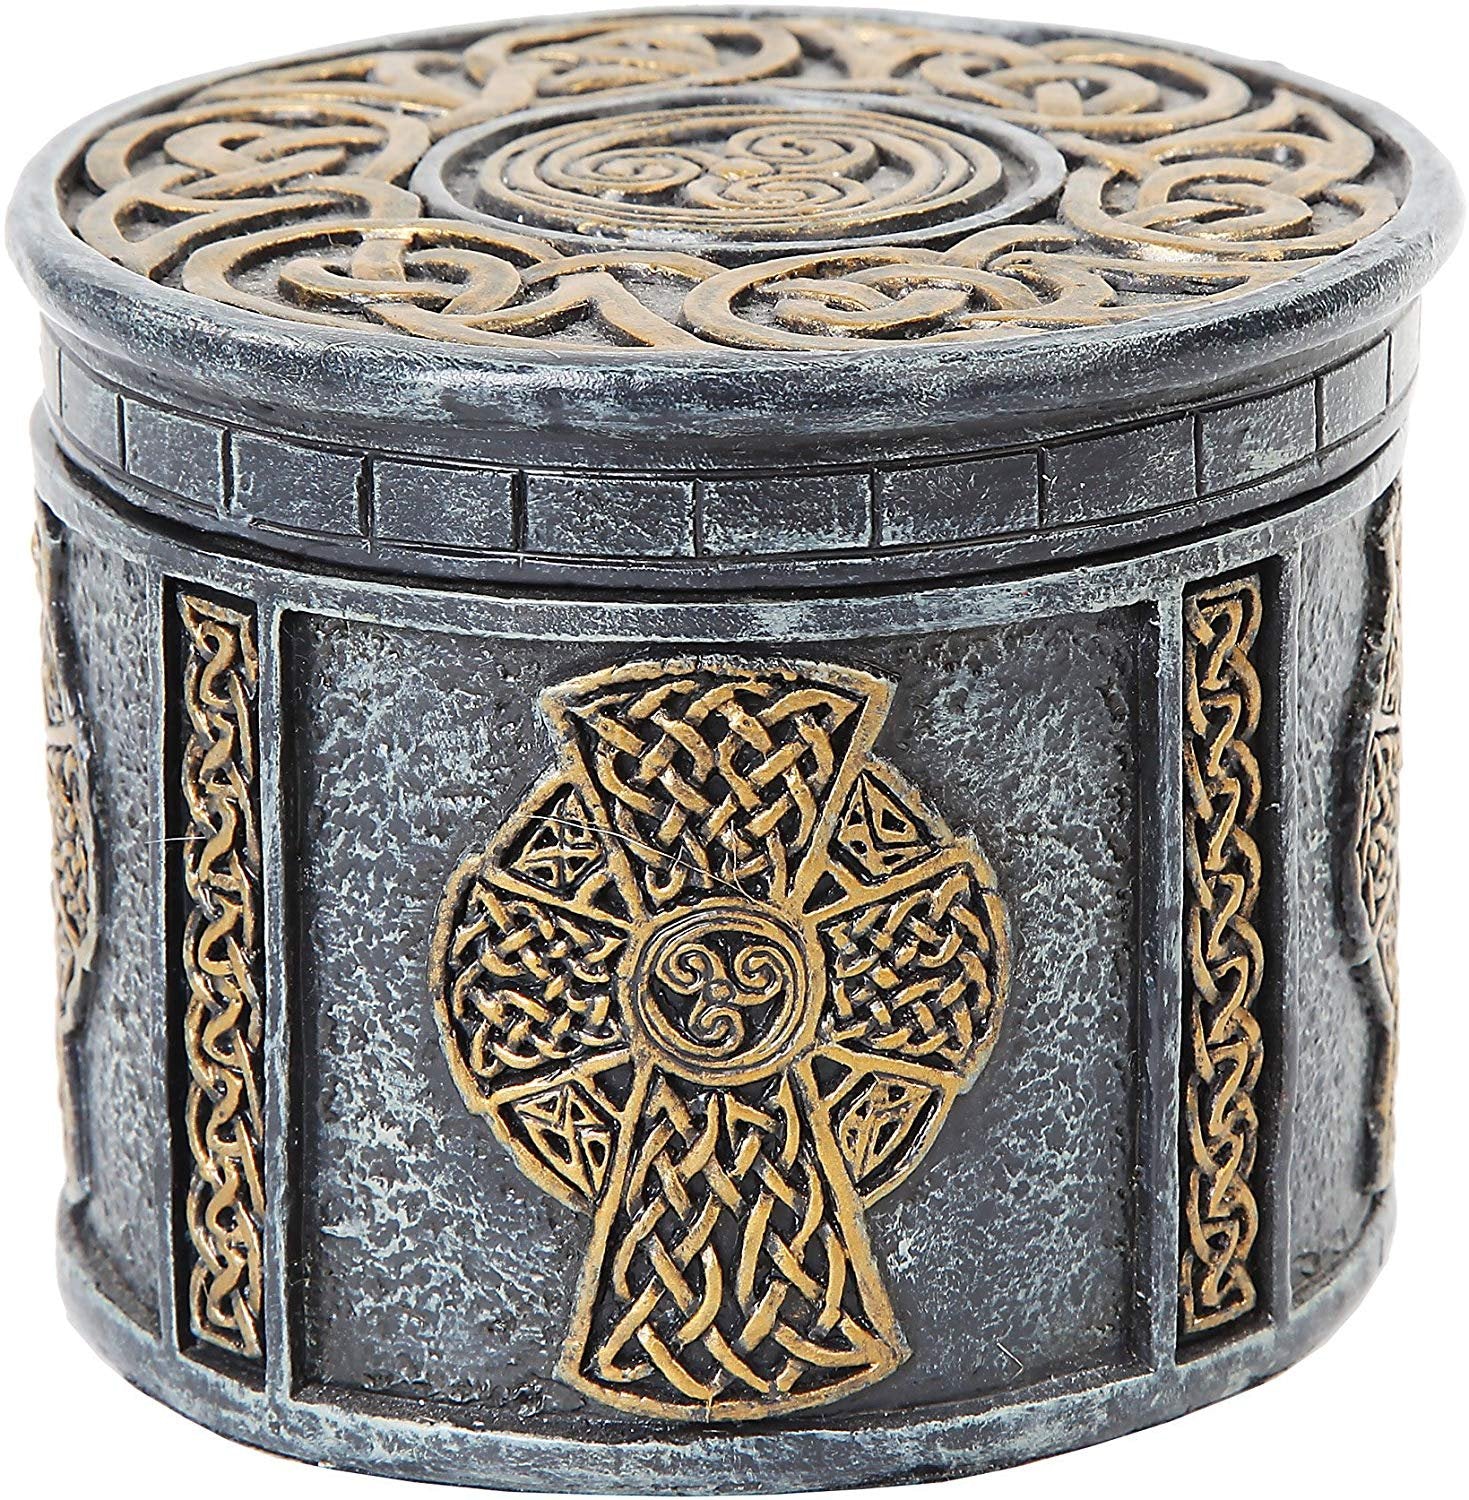 PTC 4.13 Inch Engraved Celtic Cross Circular Jewelry/Trinket Box Figurine